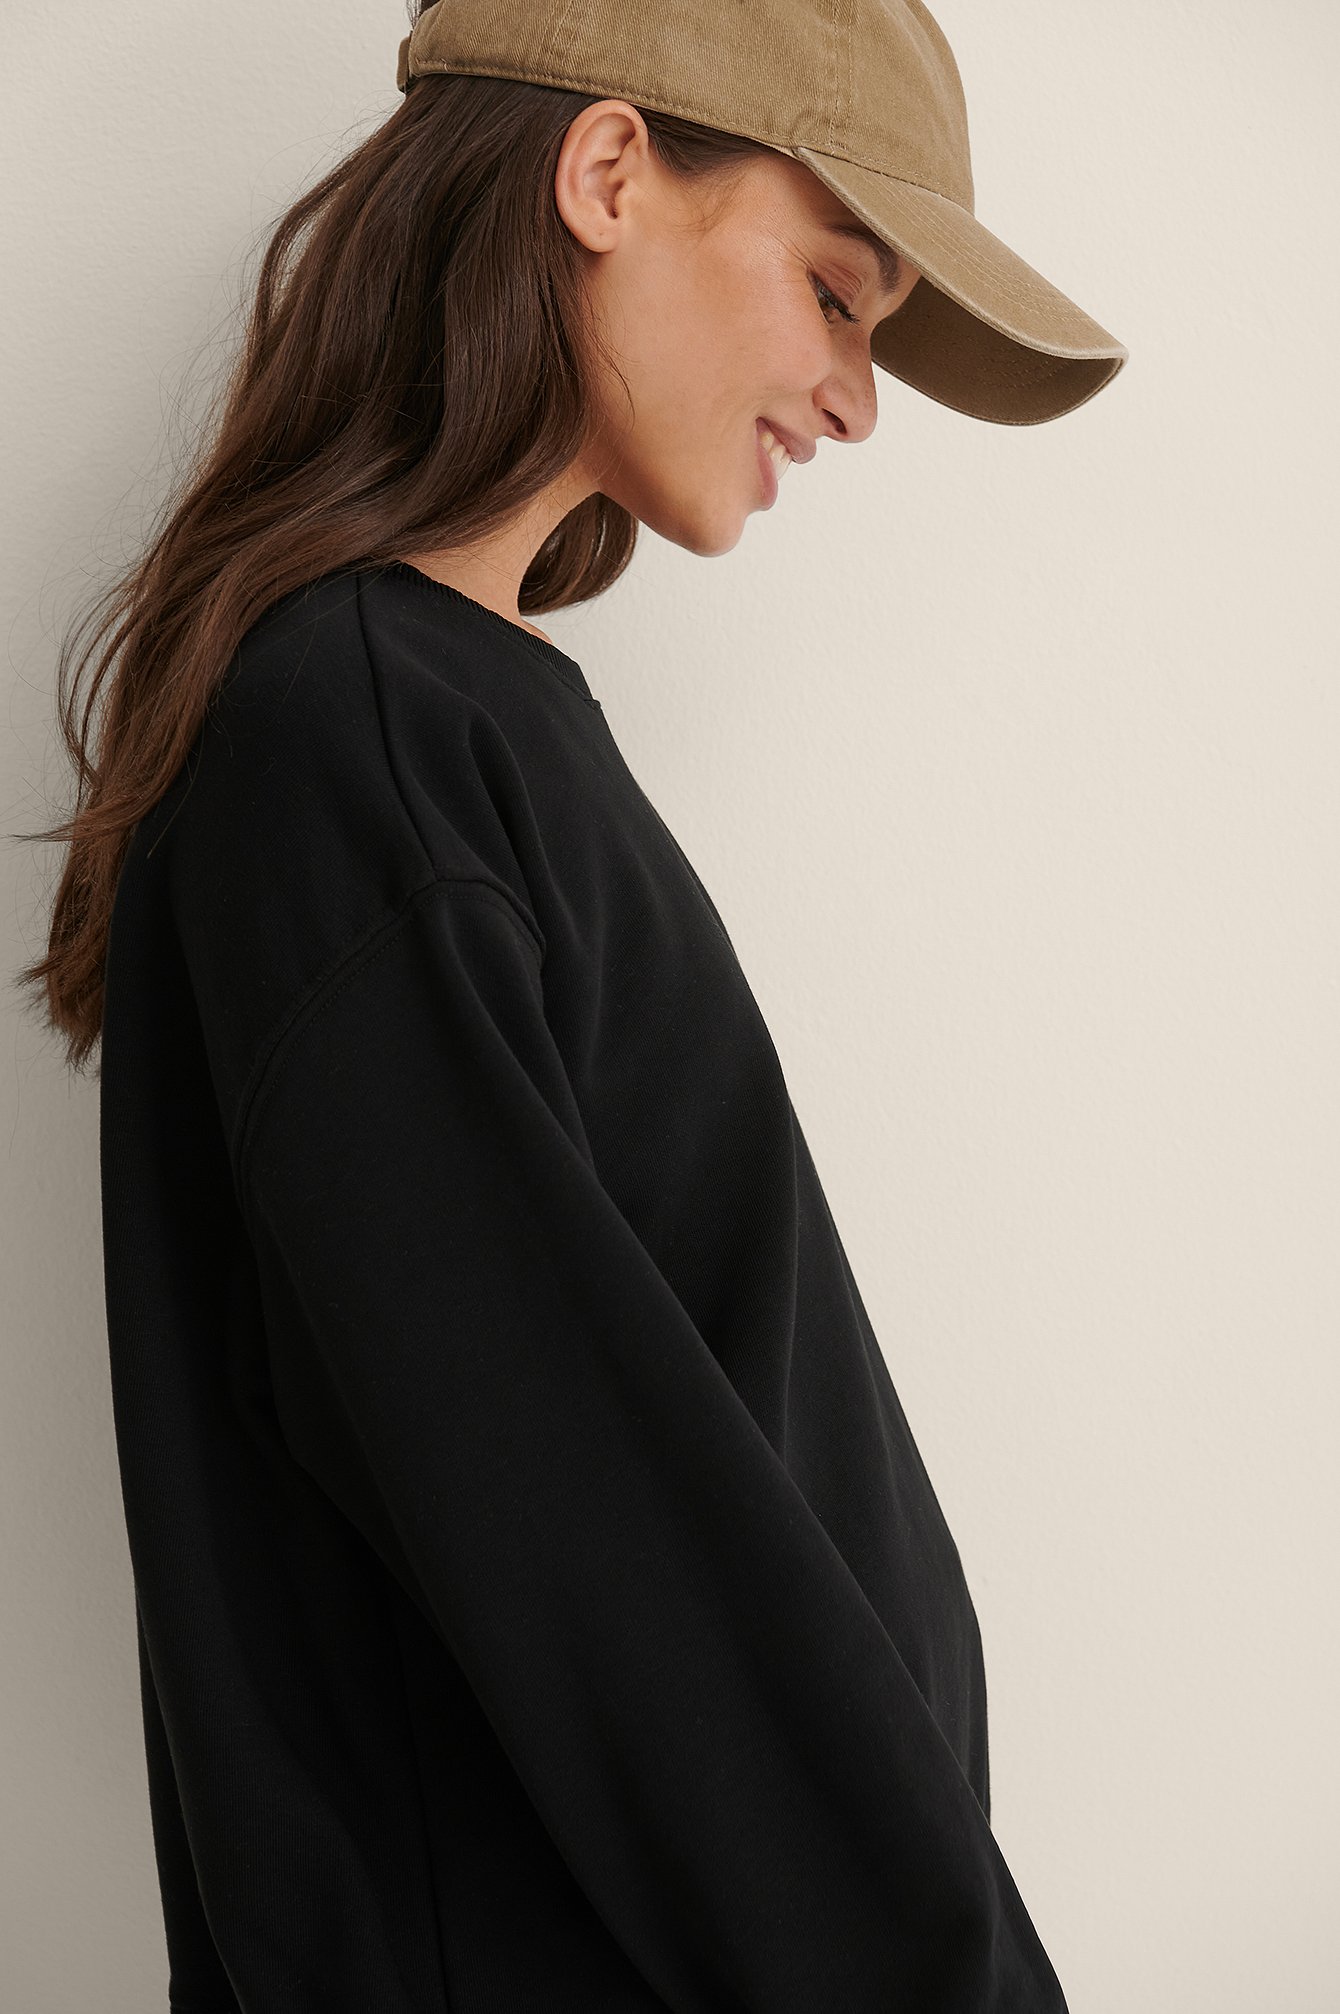 Black Oversize-Sweatshirt